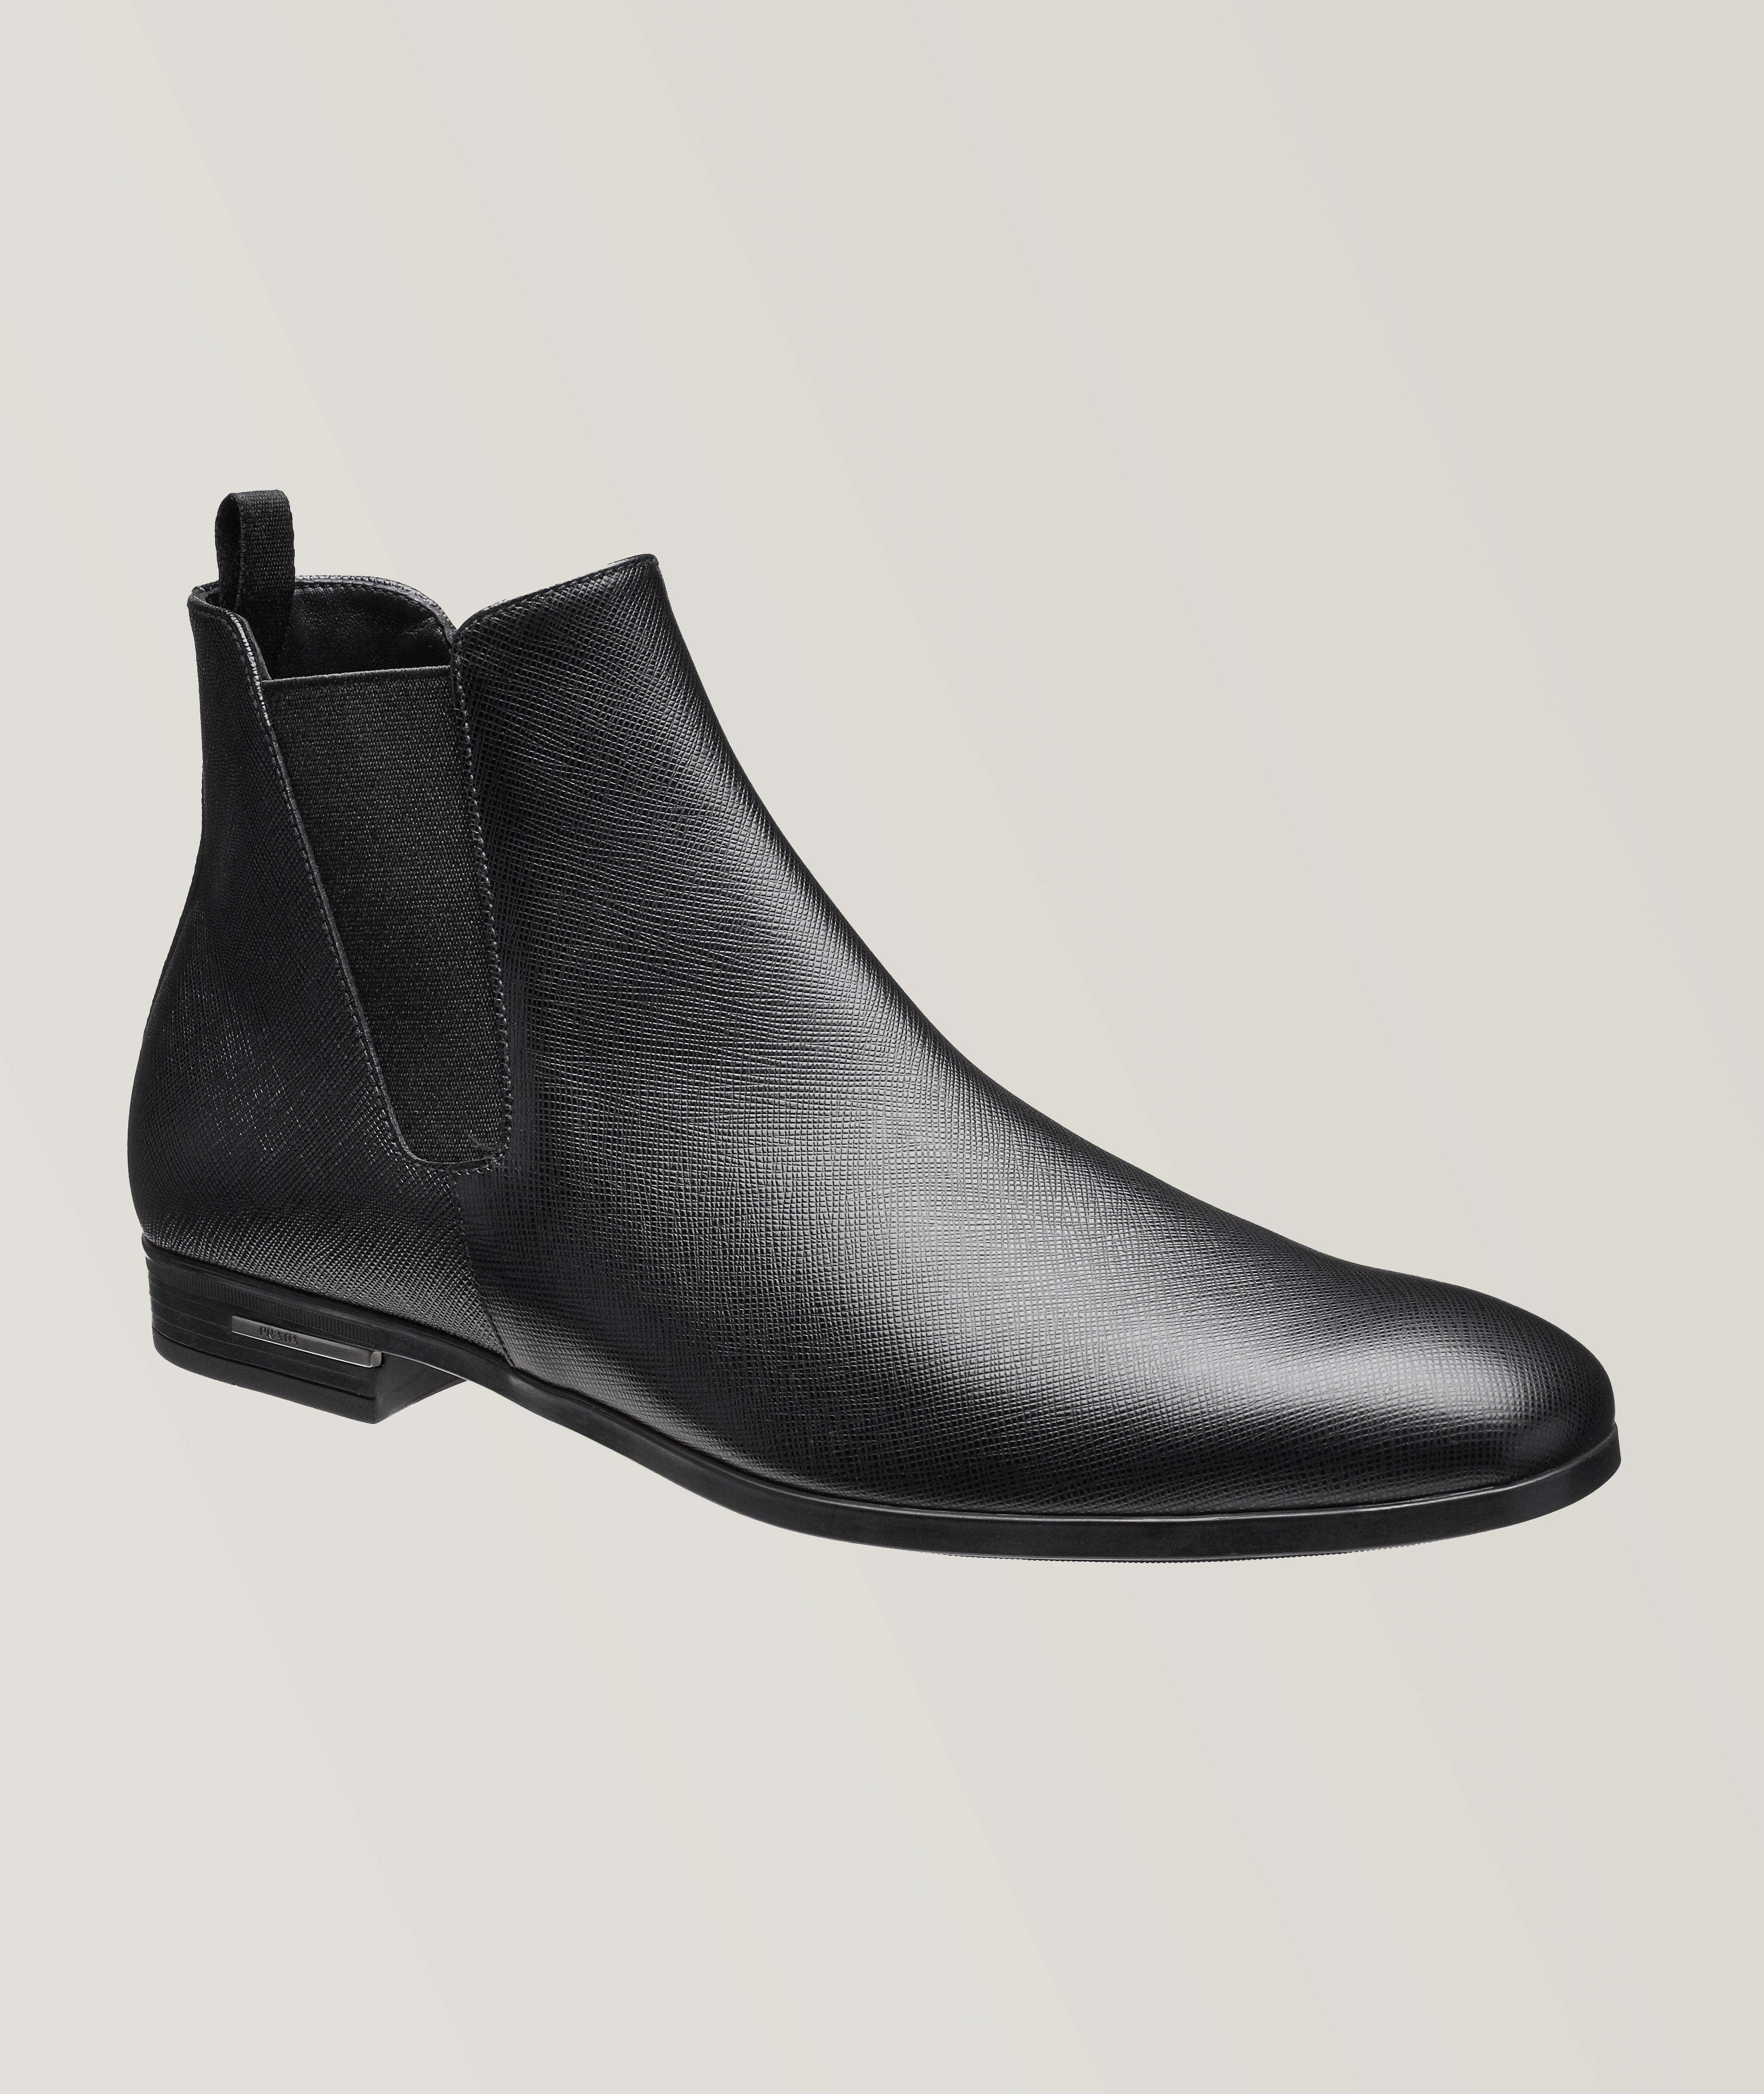 Prada Saffiano Leather Chelsea Boots